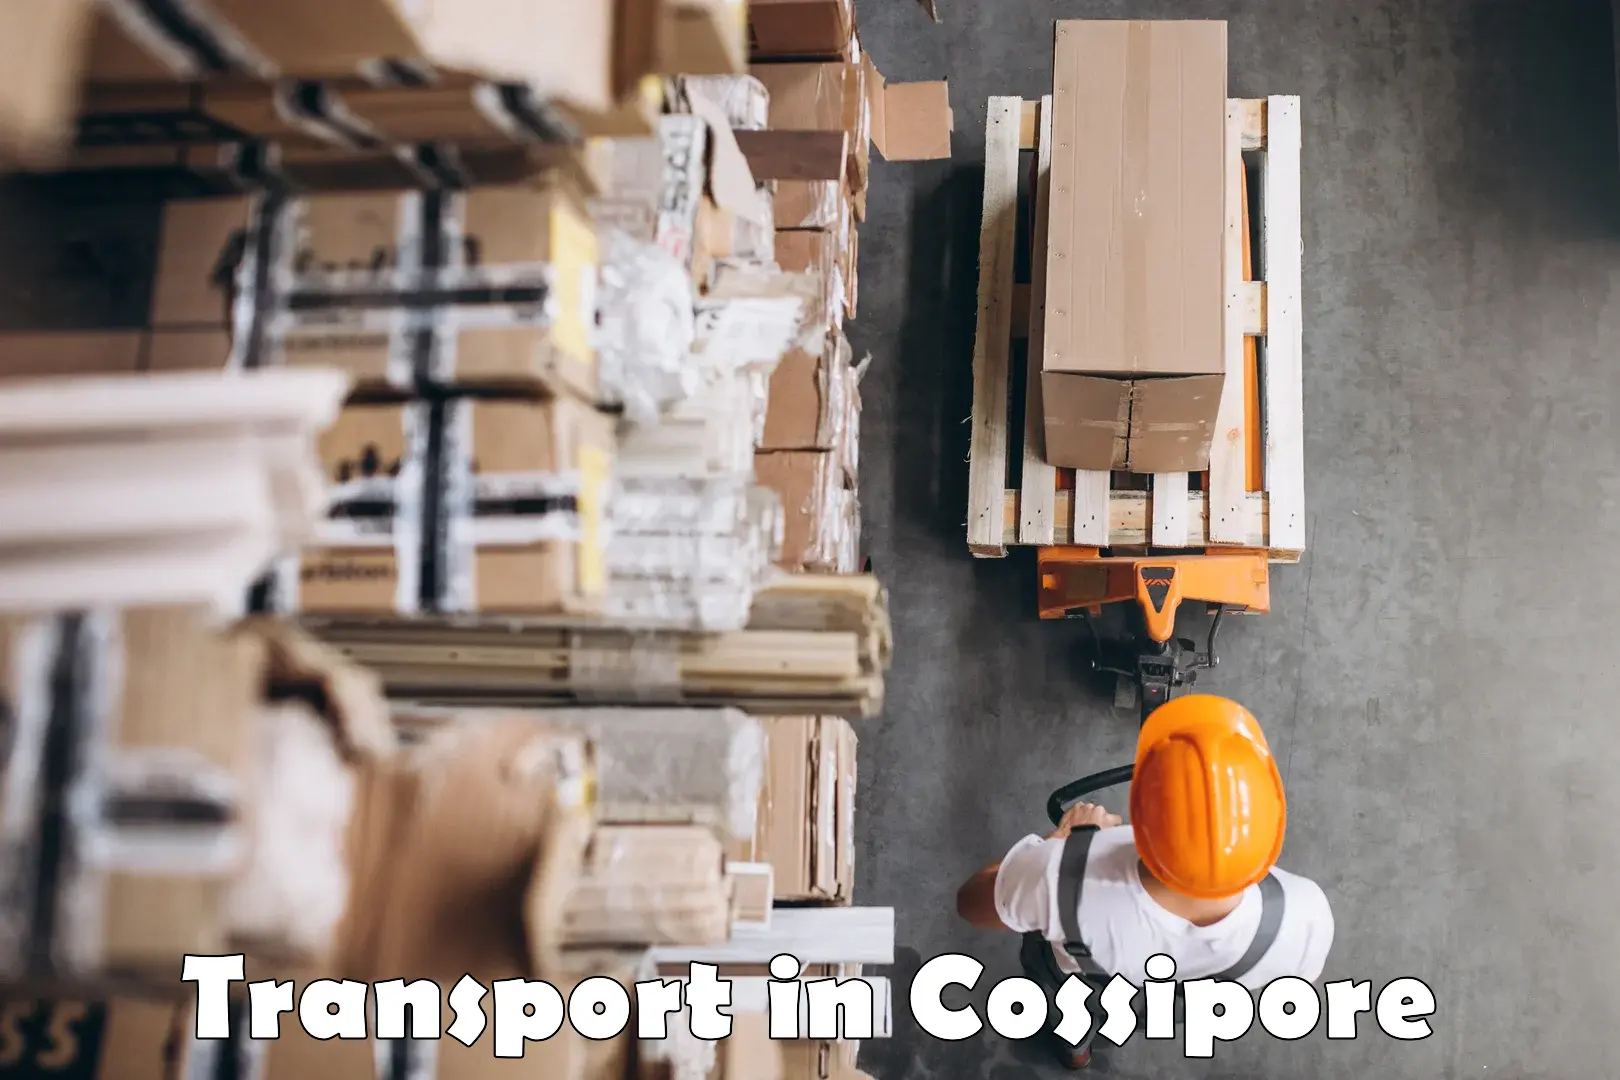 Lorry transport service in Cossipore